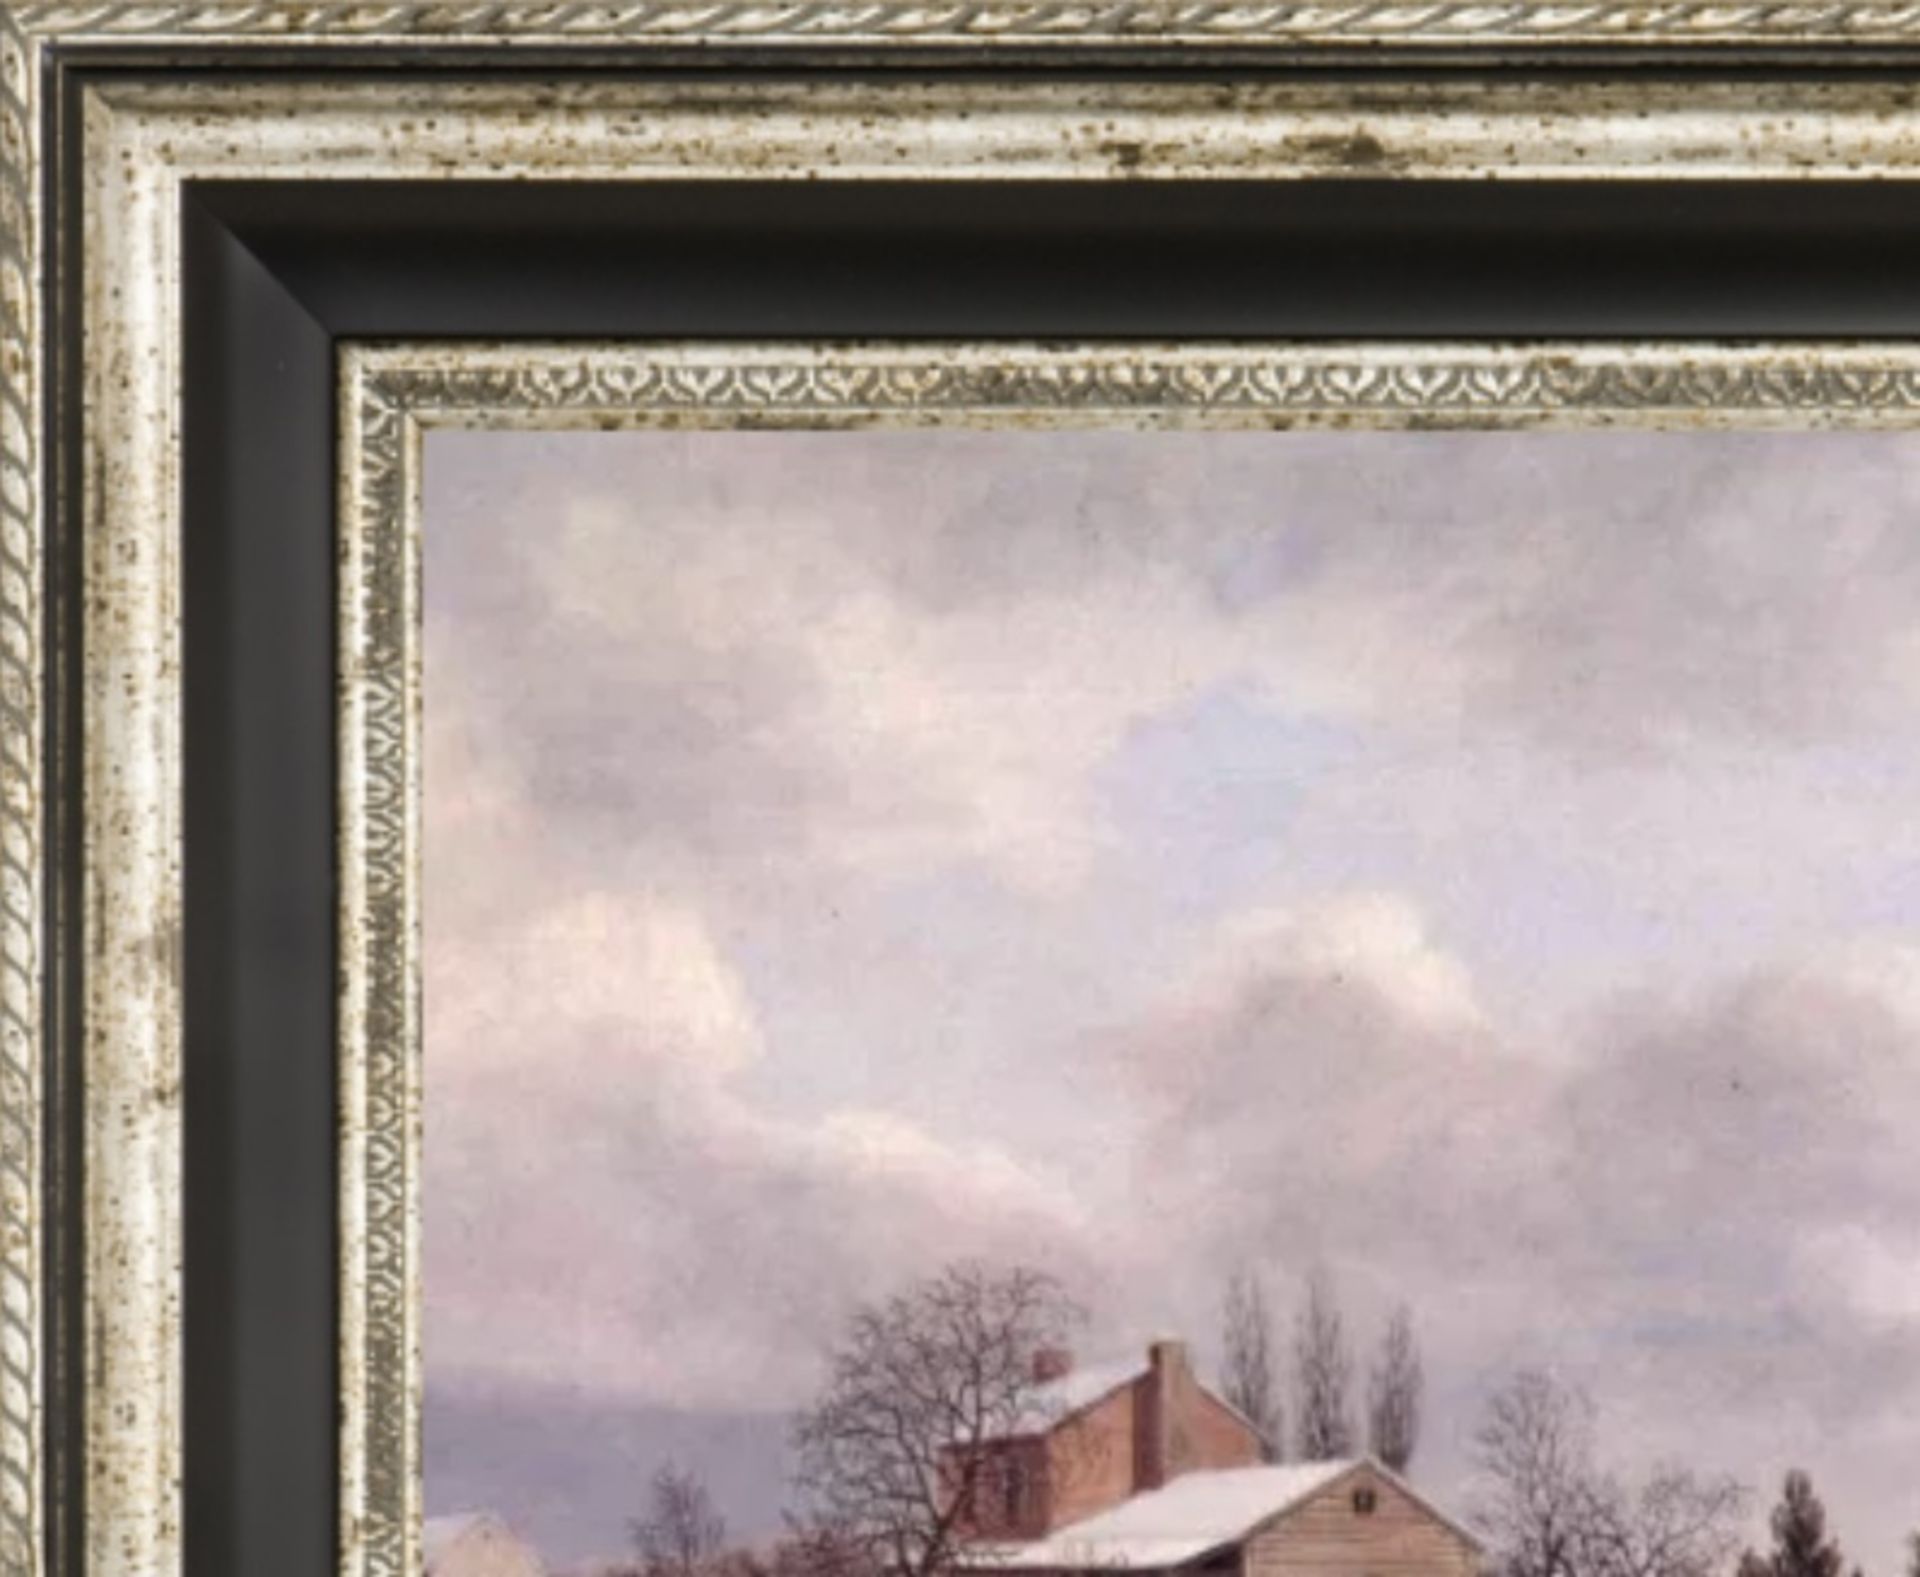 Thomas Birch "Pennsylvania Winter Scene" Painting - Image 5 of 5